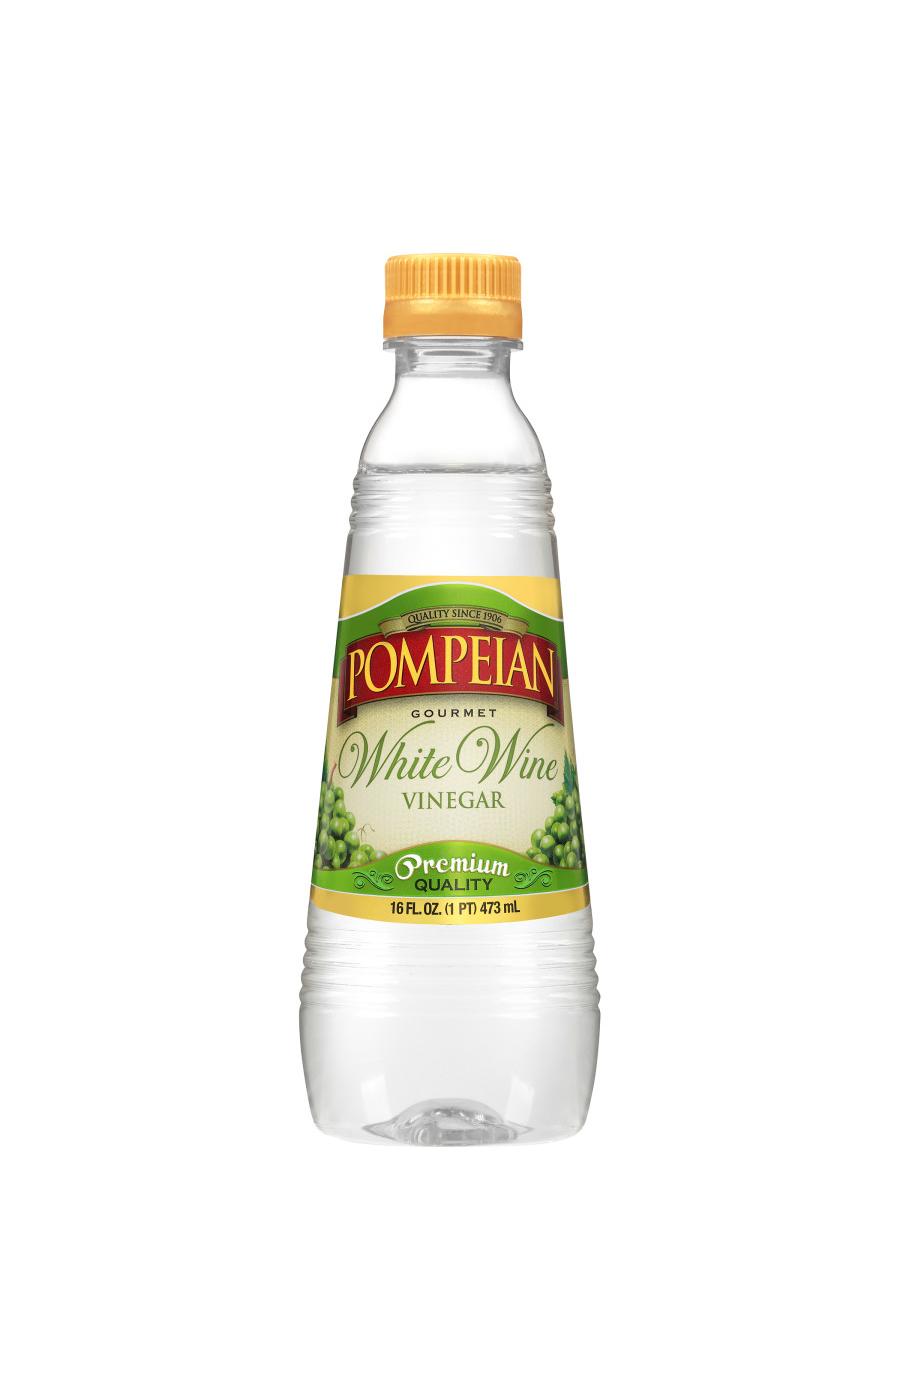 Pompeian White Wine Vinegar; image 1 of 4